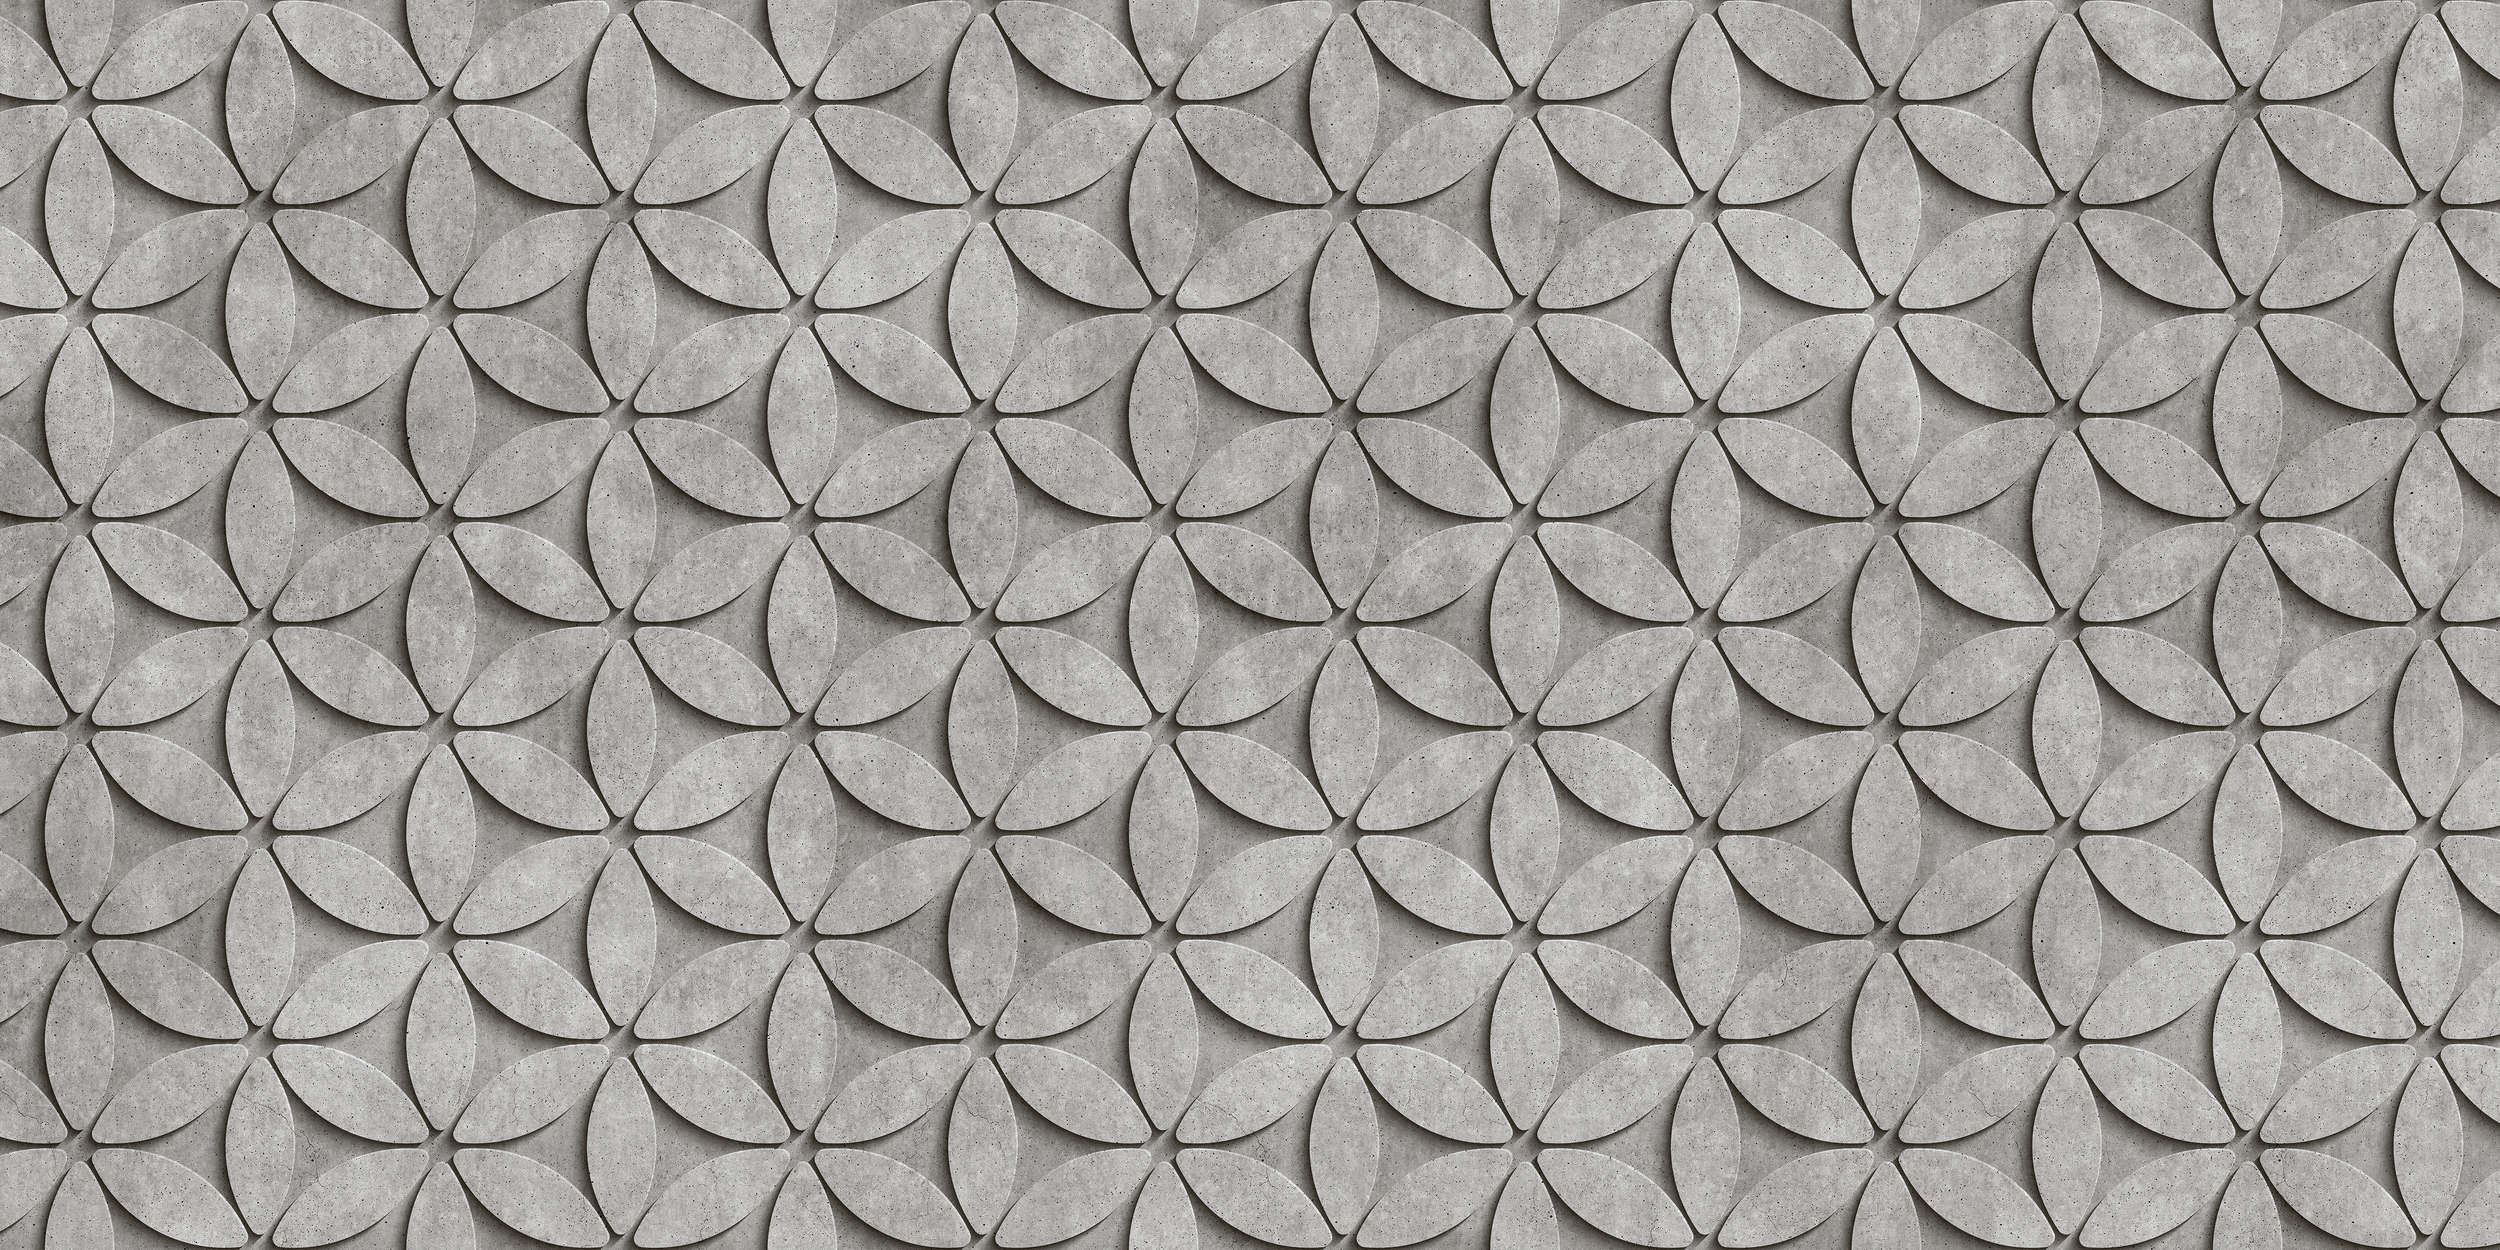             Tile 1 - Fototapete in Cooler 3D Beton-Polygone – Grau, Schwarz | Mattes Glattvlies
        